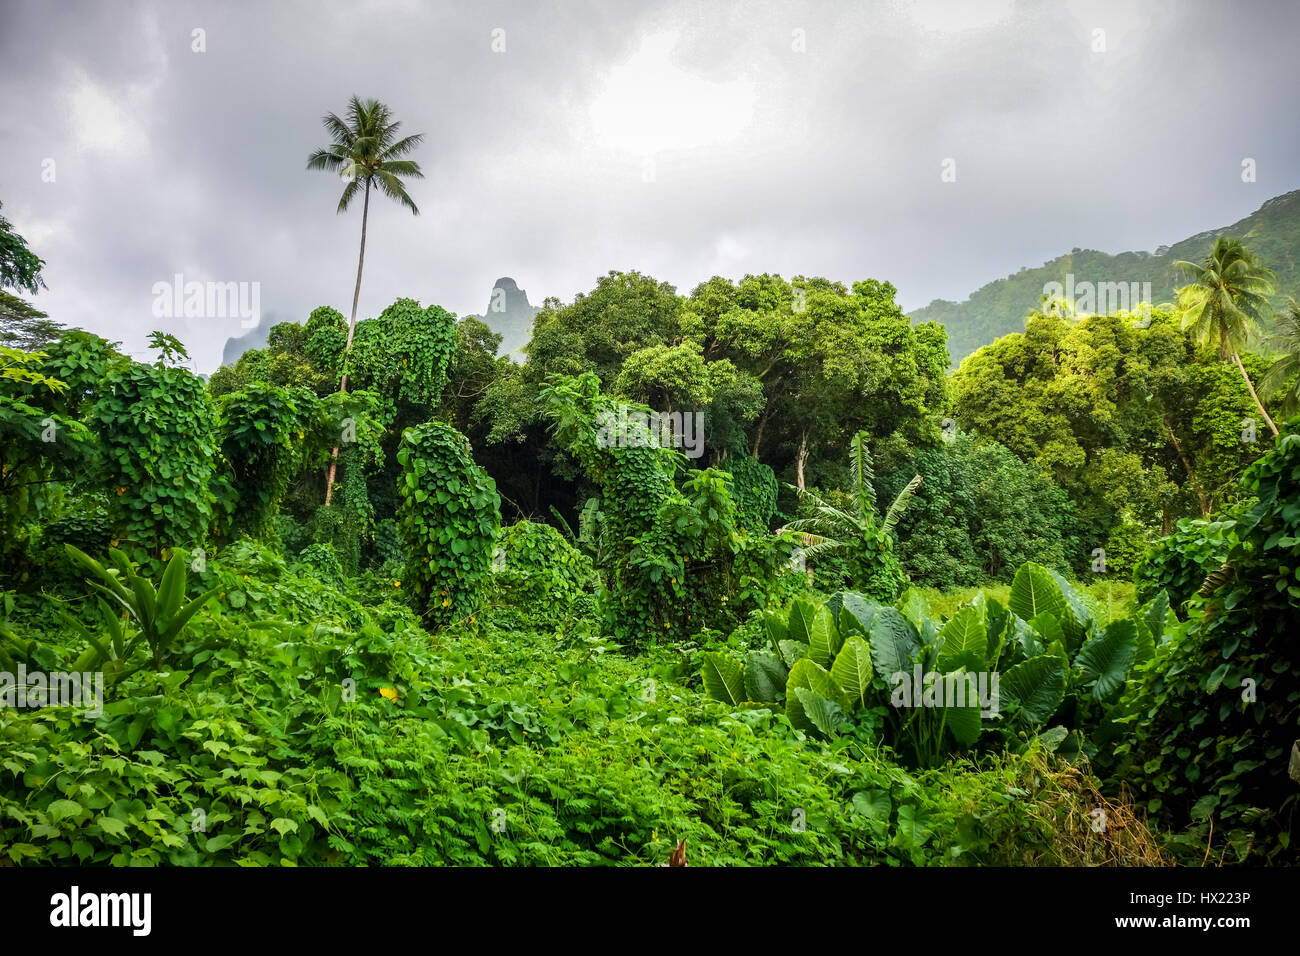 Moorea island jungle and mountains landscape. French Polynesia Stock Photo